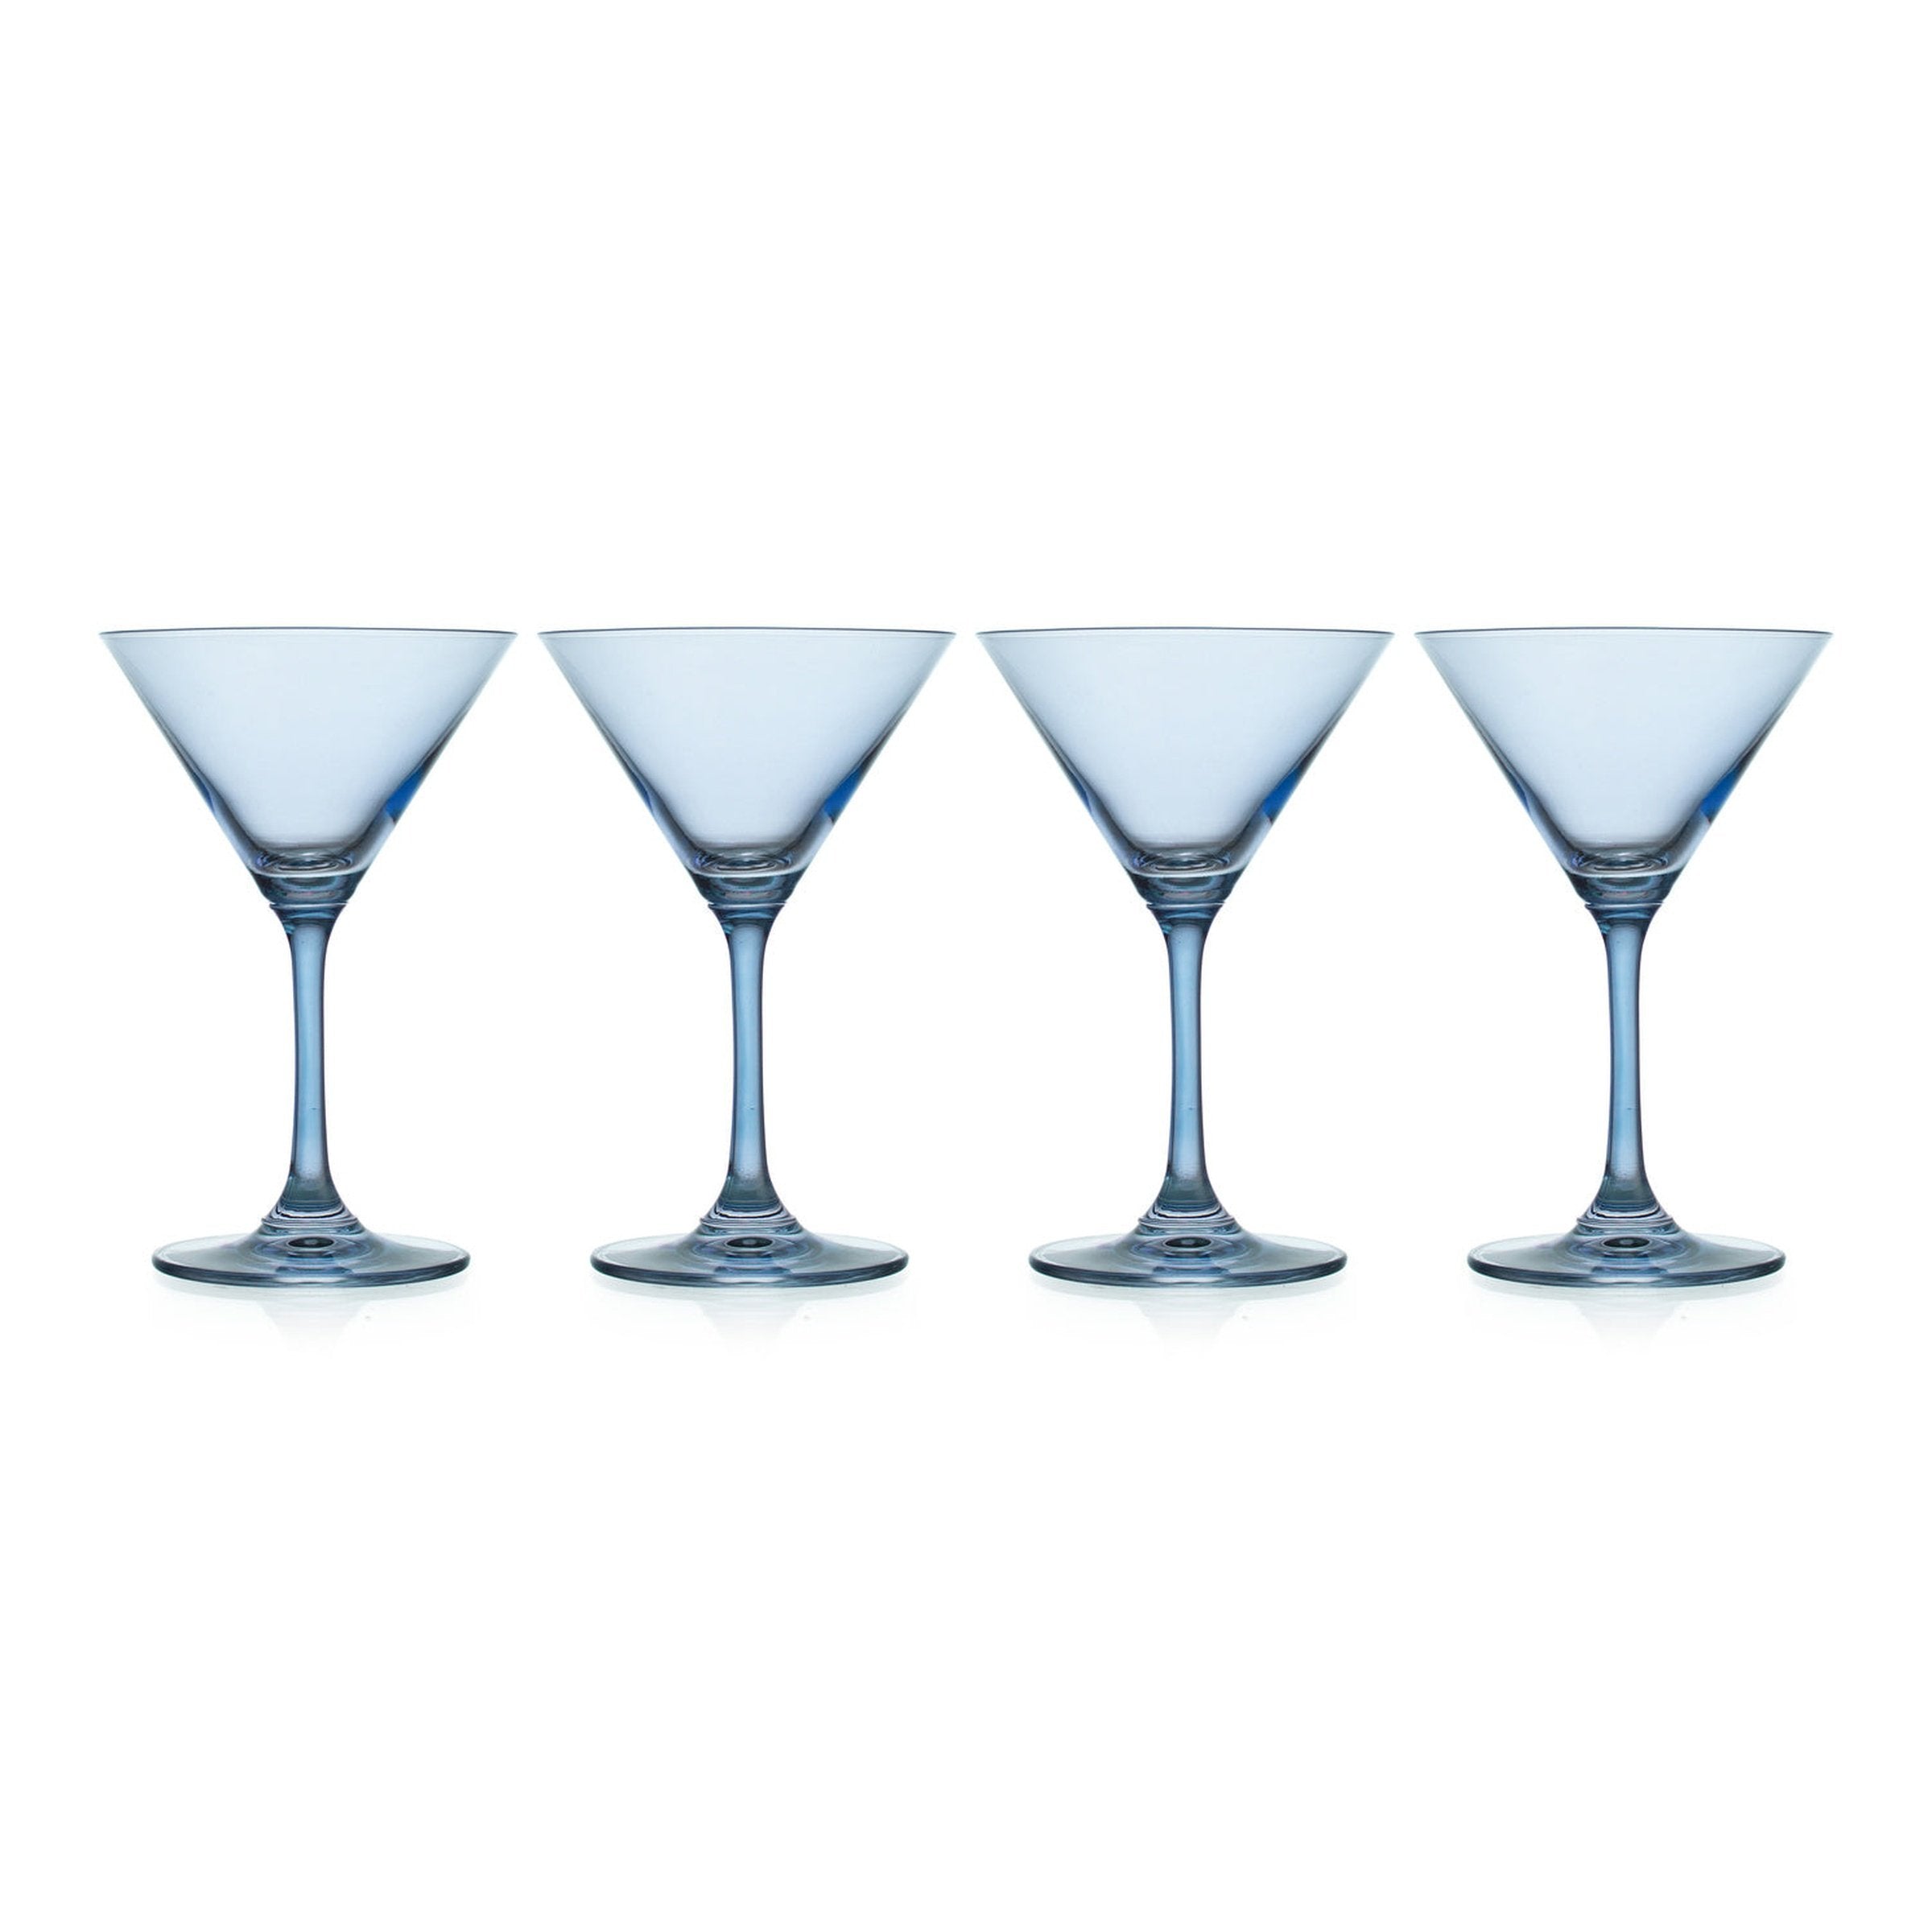 Godinger Ceska Carat Martini Glass - Set of 2 - Macy's